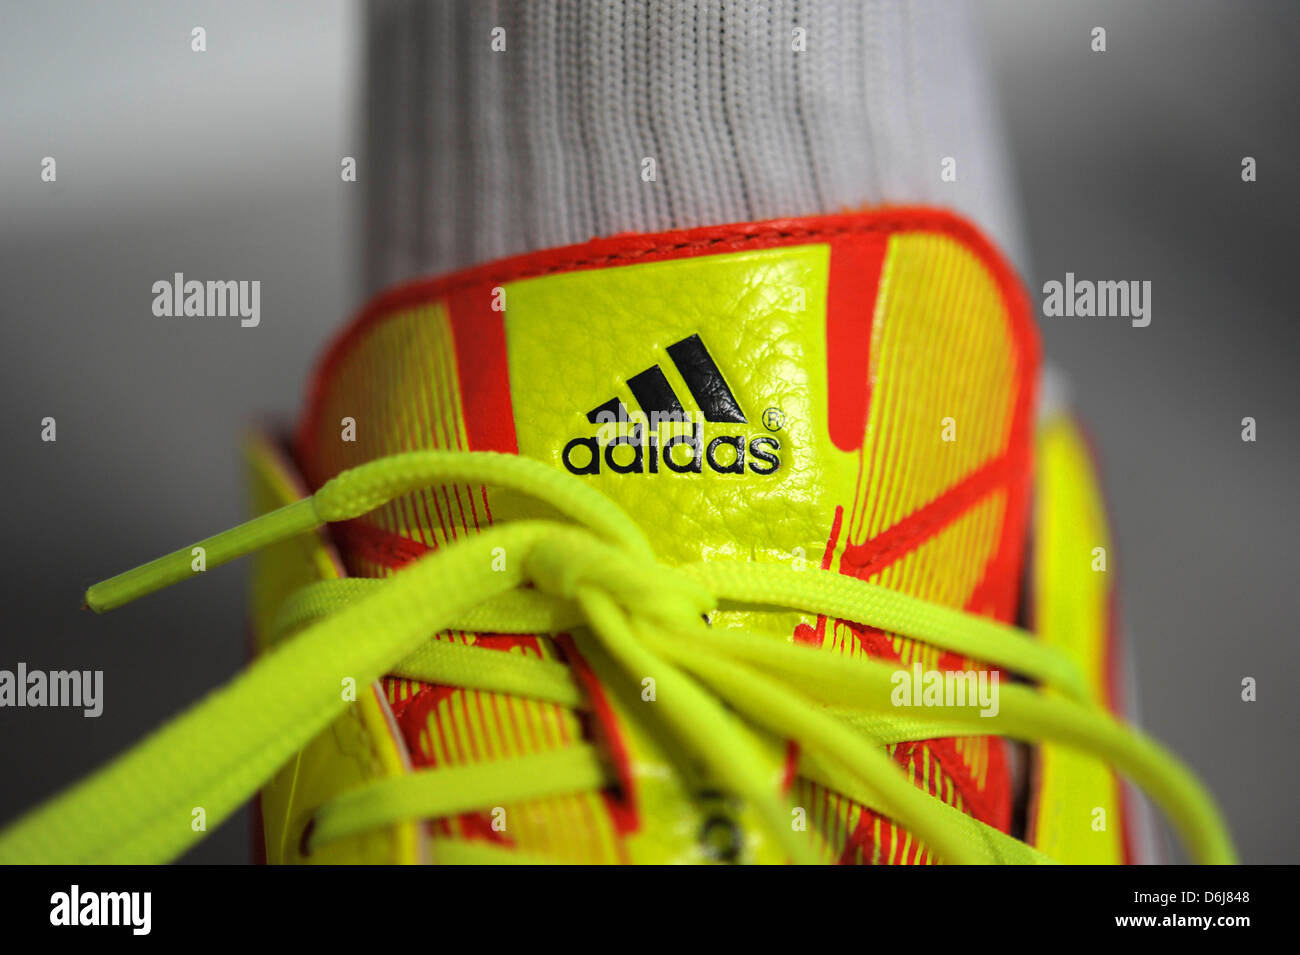 Adidas soccer shoe fotografías e imágenes de alta resolución - Alamy